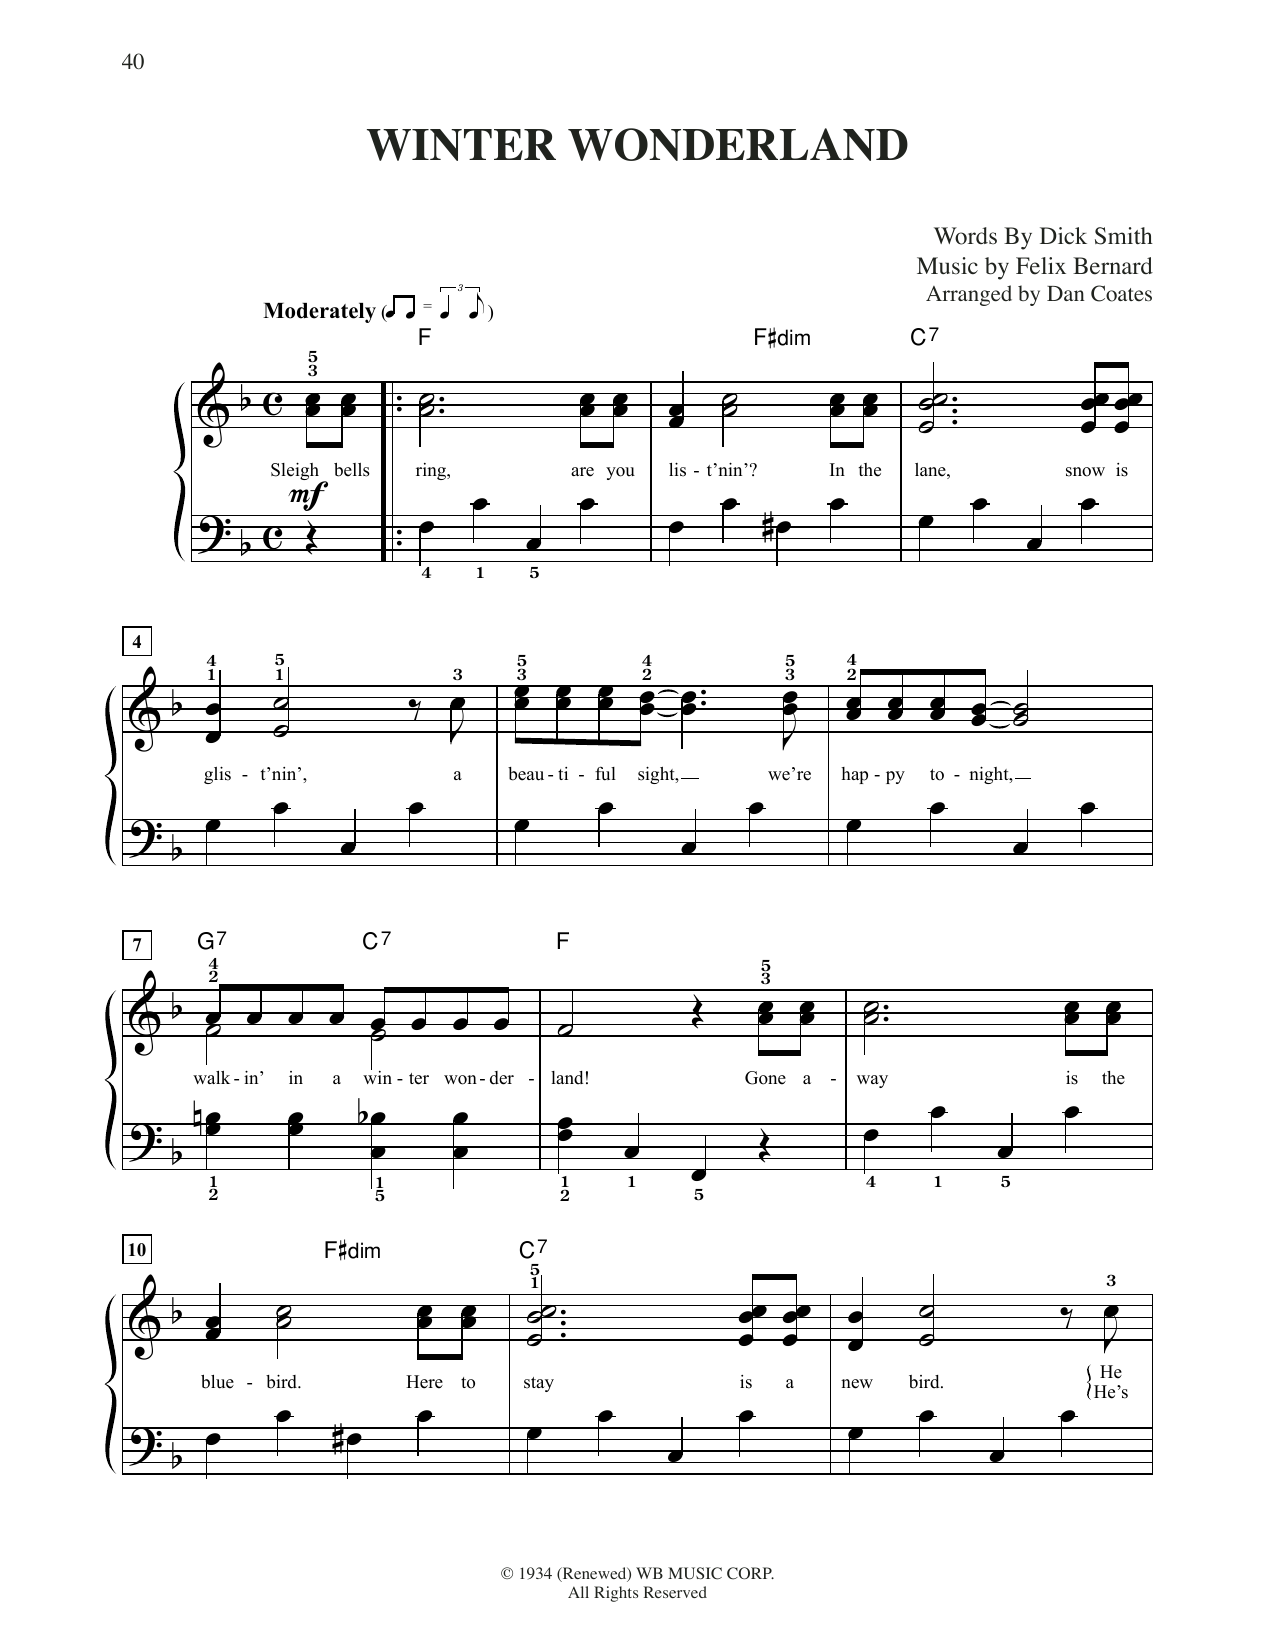 Felix Bernard Winter Wonderland (arr. Dan Coates) Sheet Music Notes & Chords for Easy Piano - Download or Print PDF